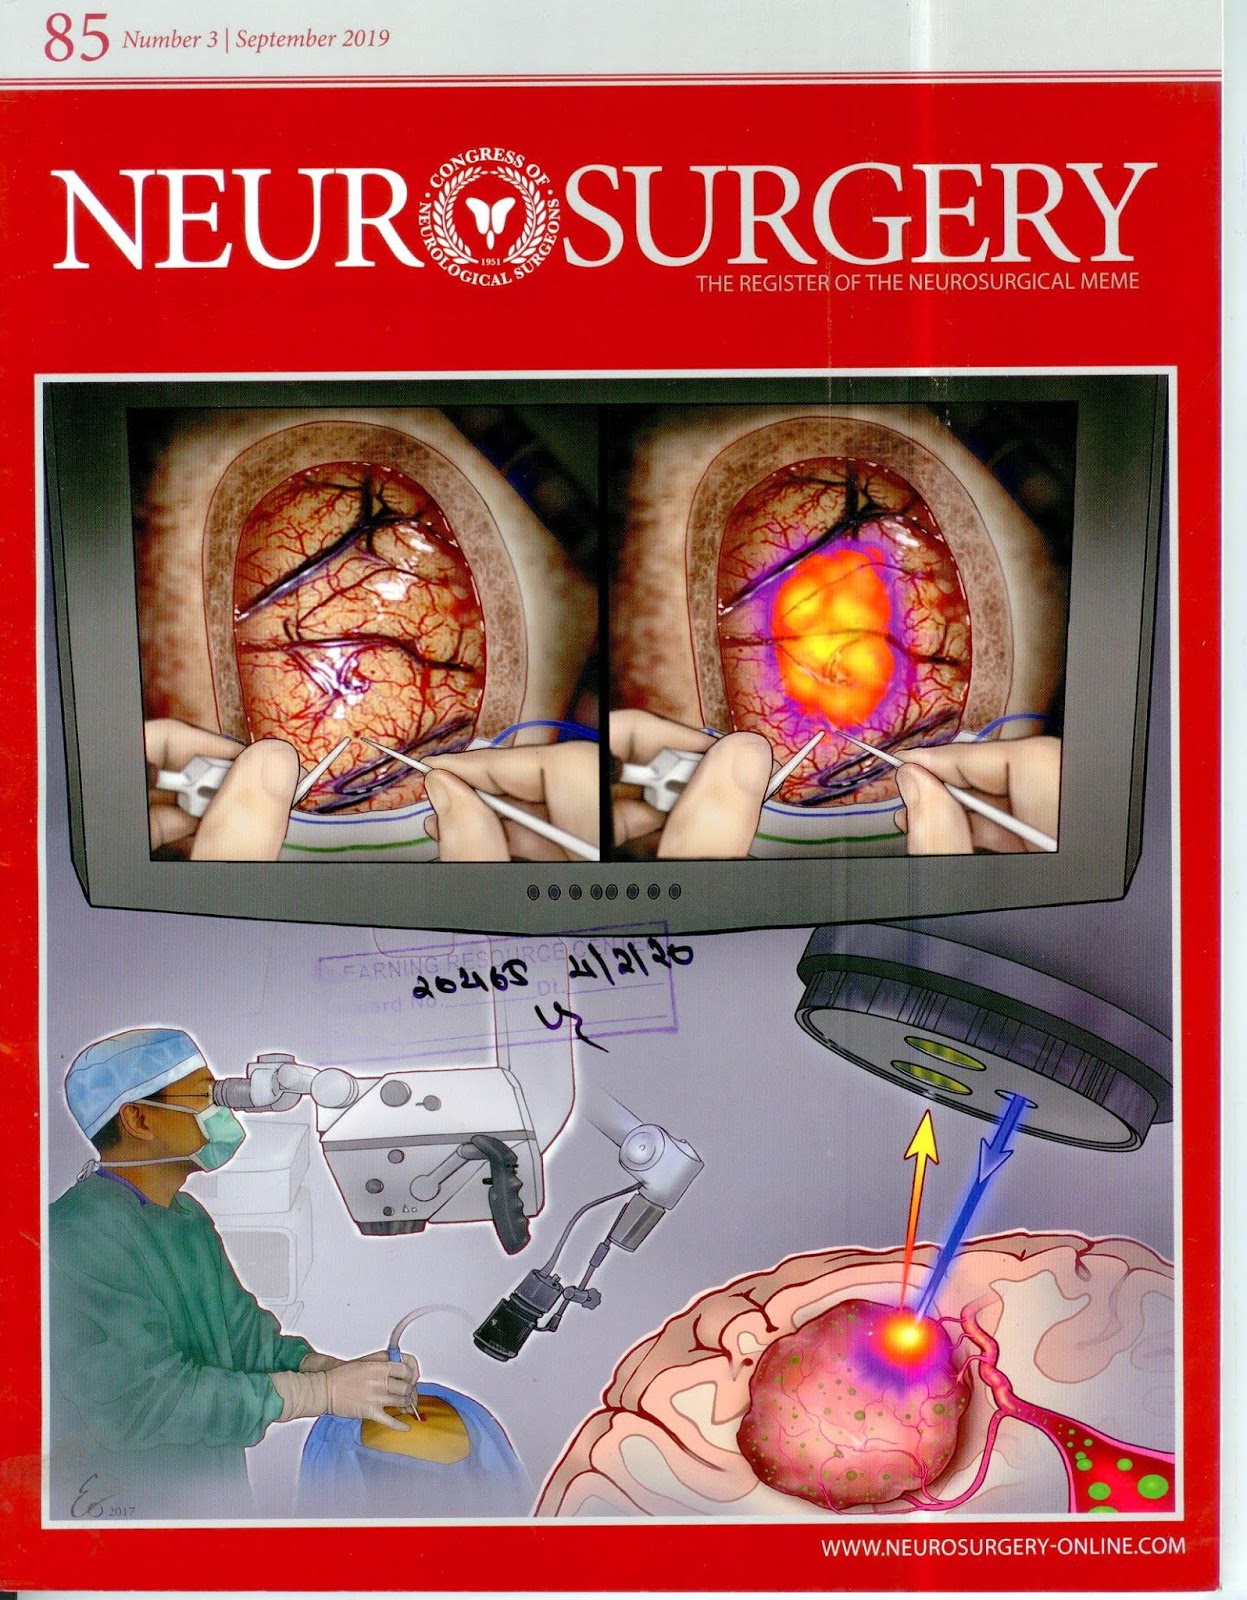 https://academic.oup.com/neurosurgery/issue/85/3